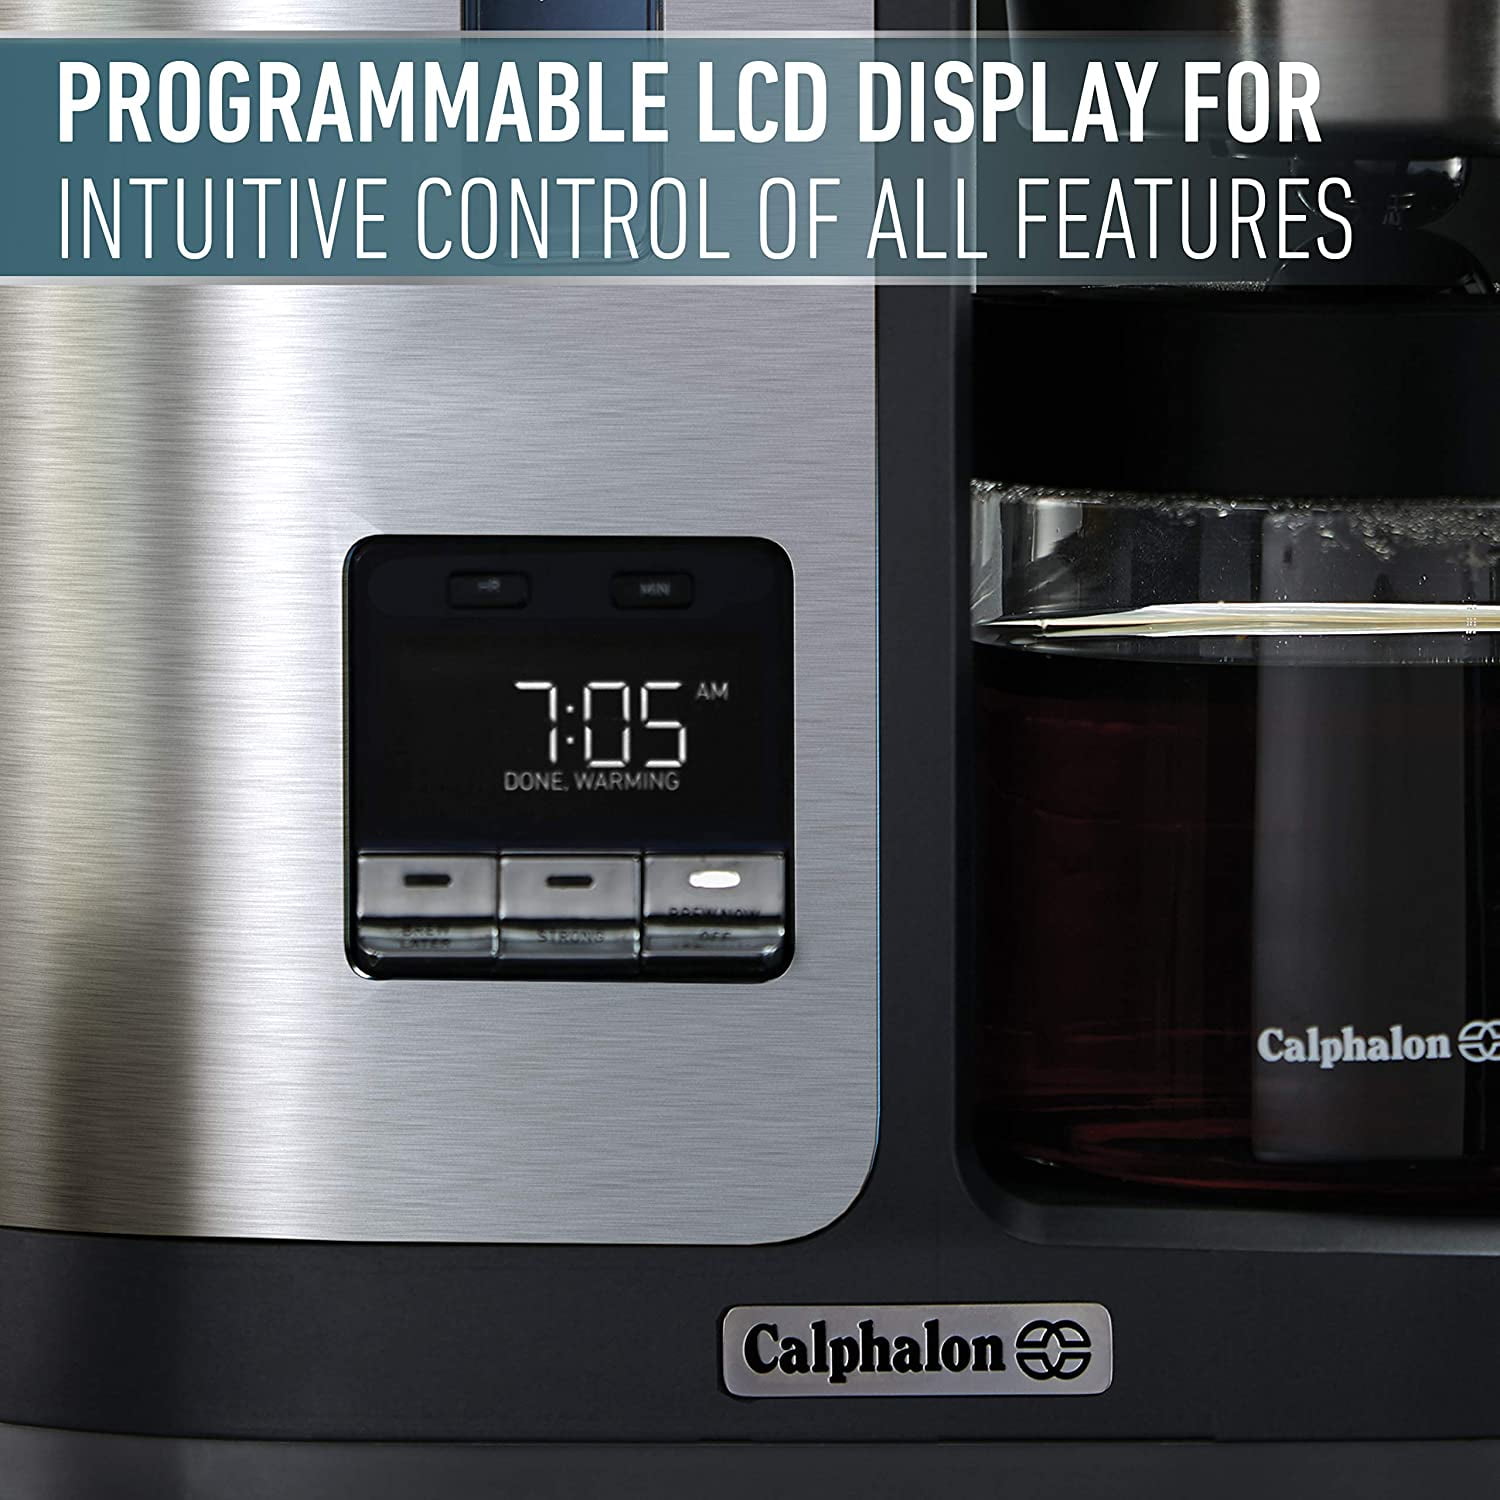 Calphalon Precision Control 10-Cup Coffee Maker